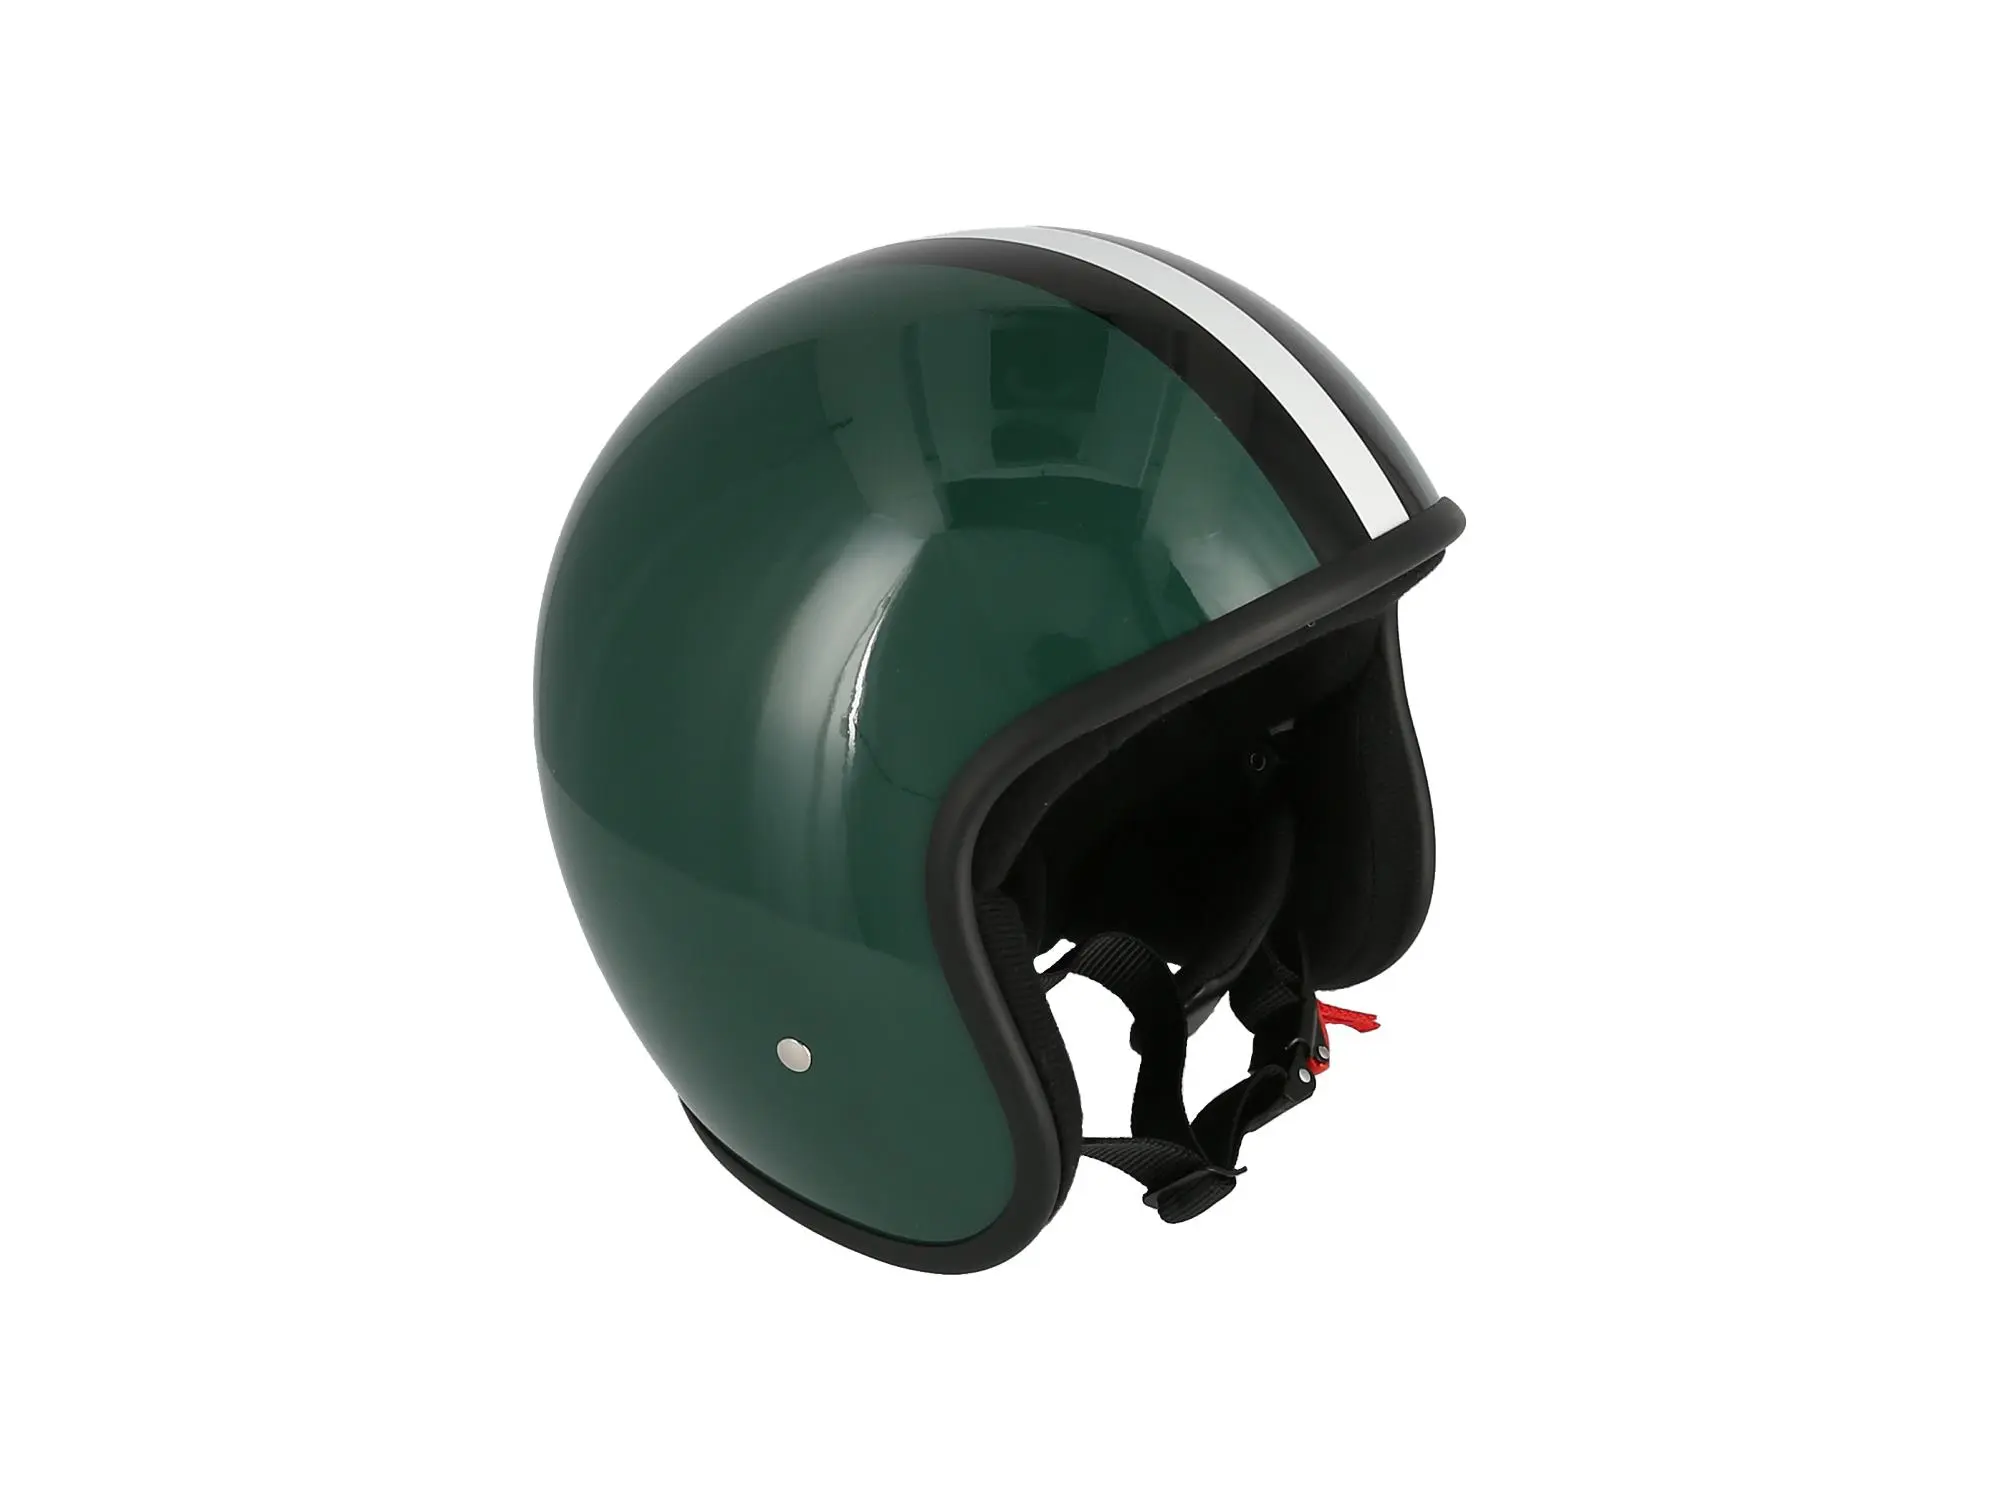 ARC Helm "Modell A-611" Retrolook - Grün mit Streifen, Art.-Nr.: 10069597 - Bild 1